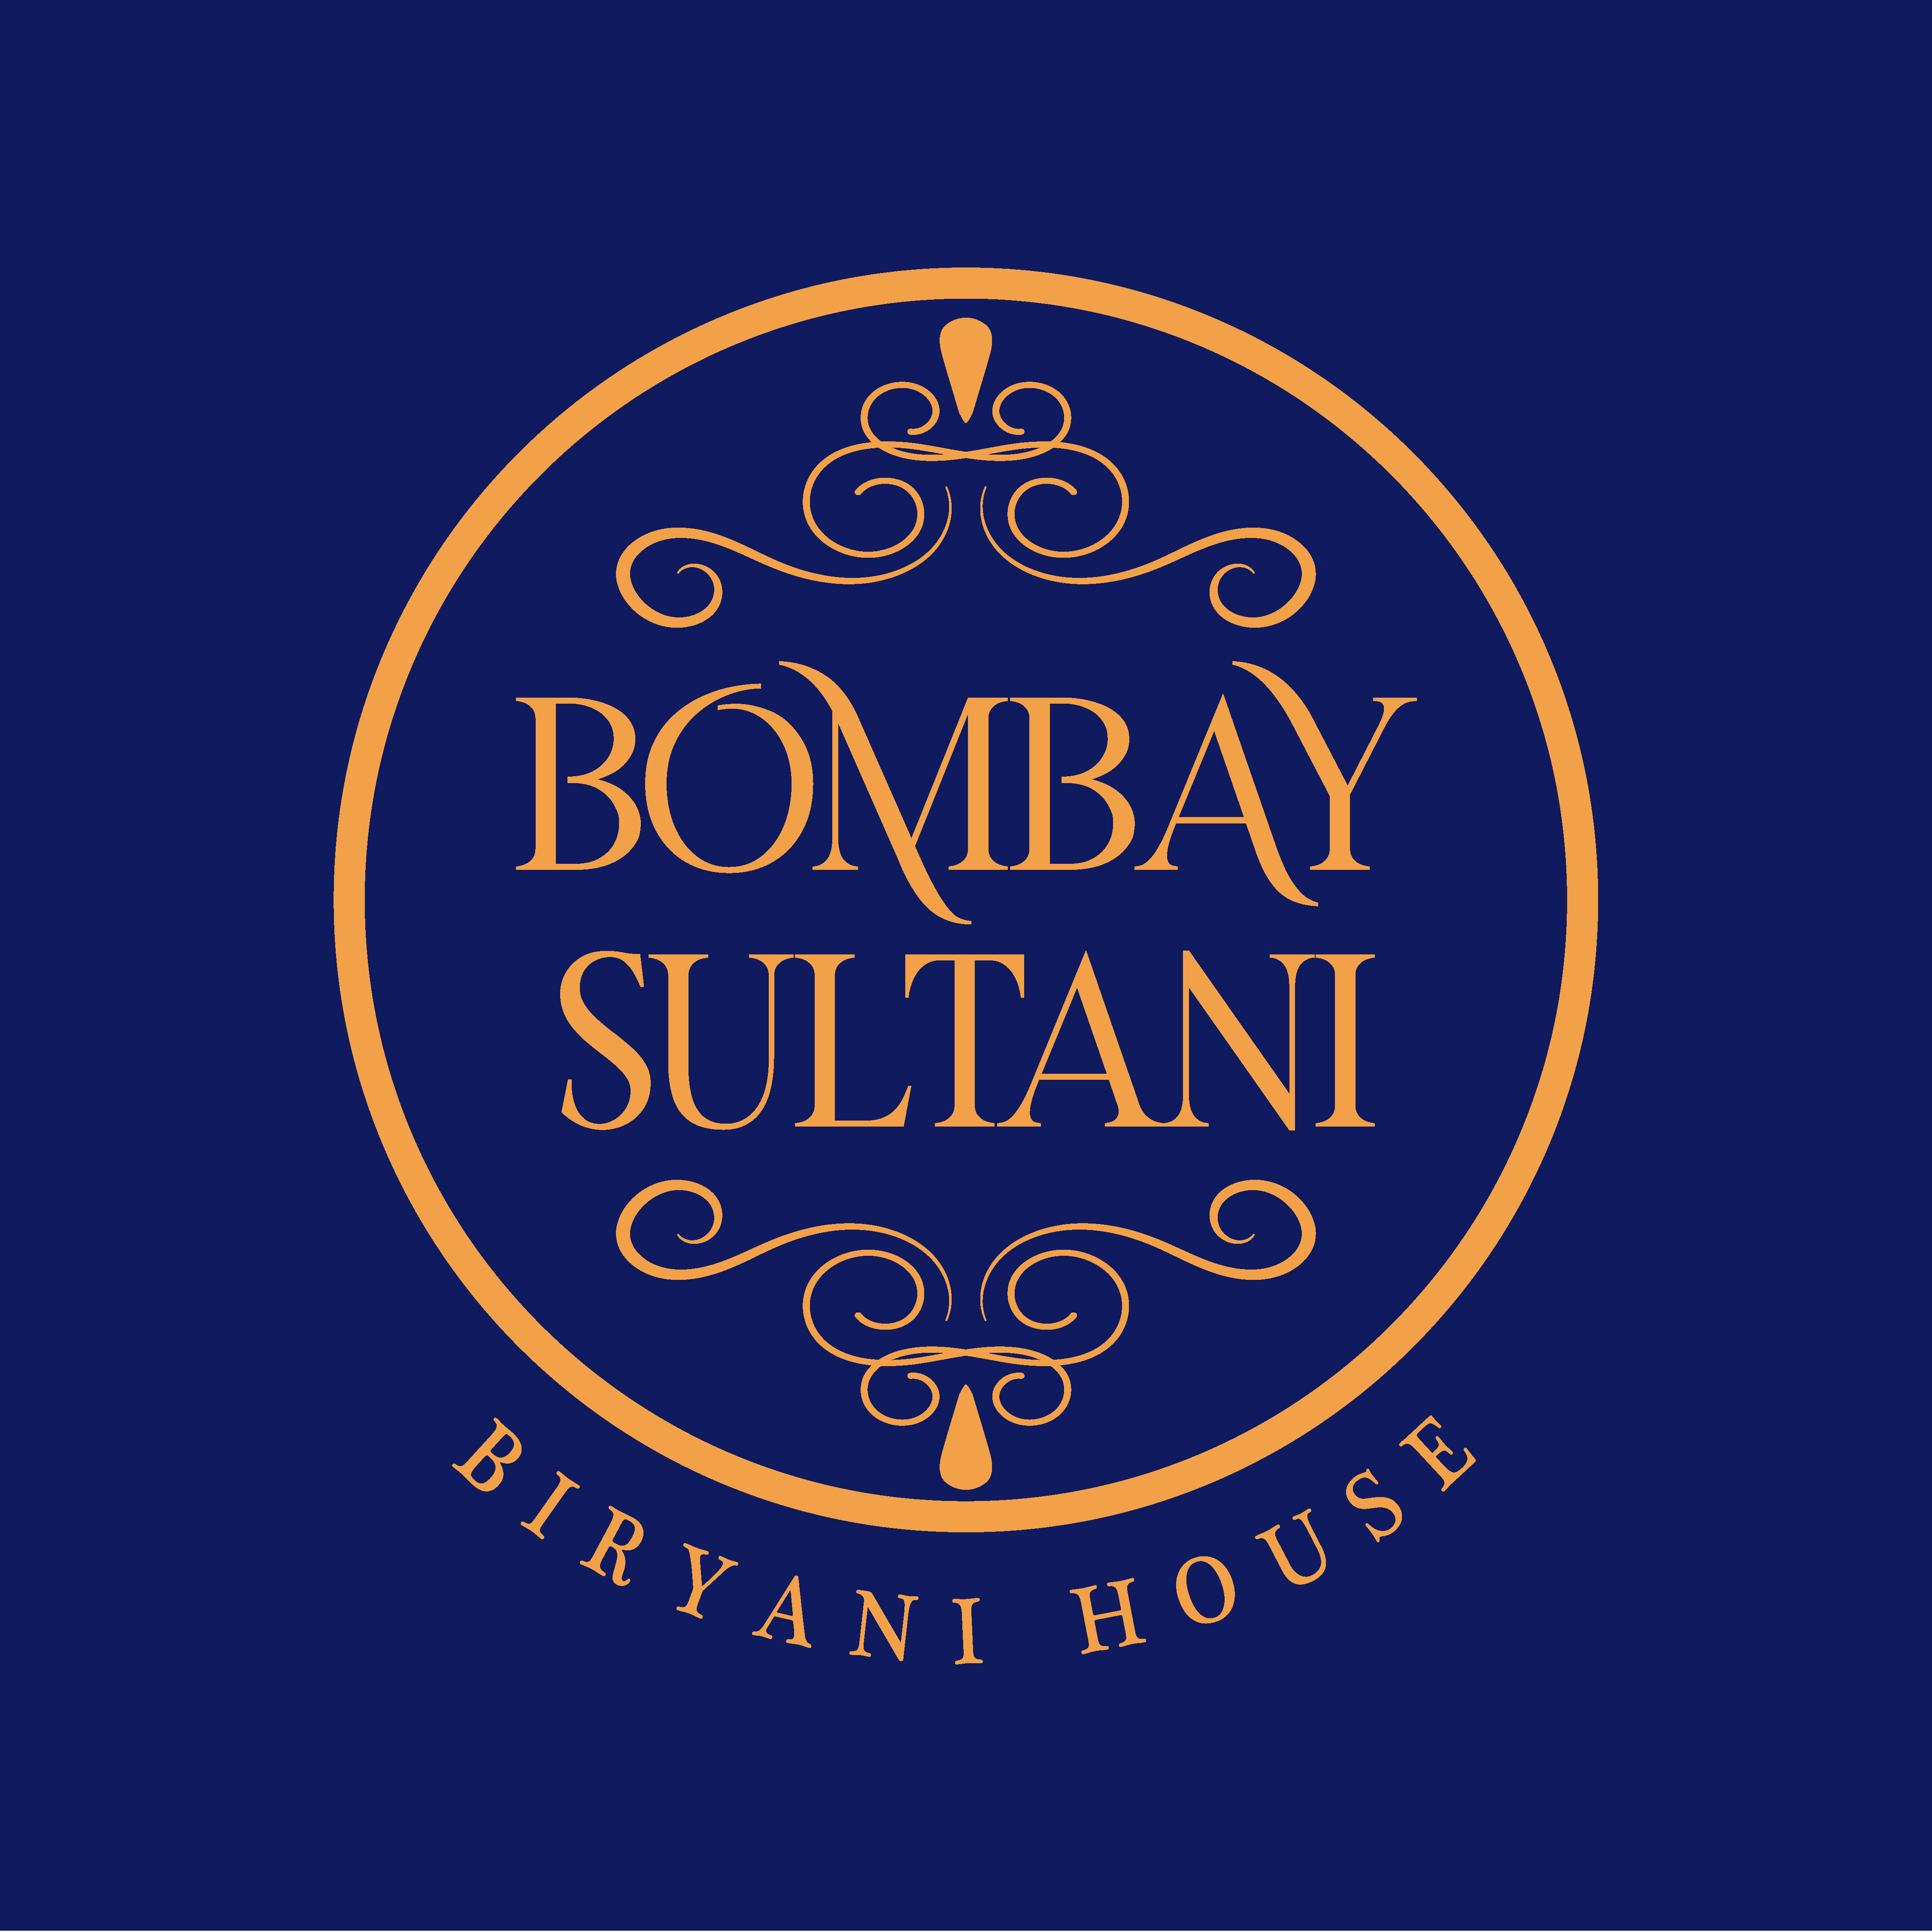 Bombay Sultaani Biryani House logo